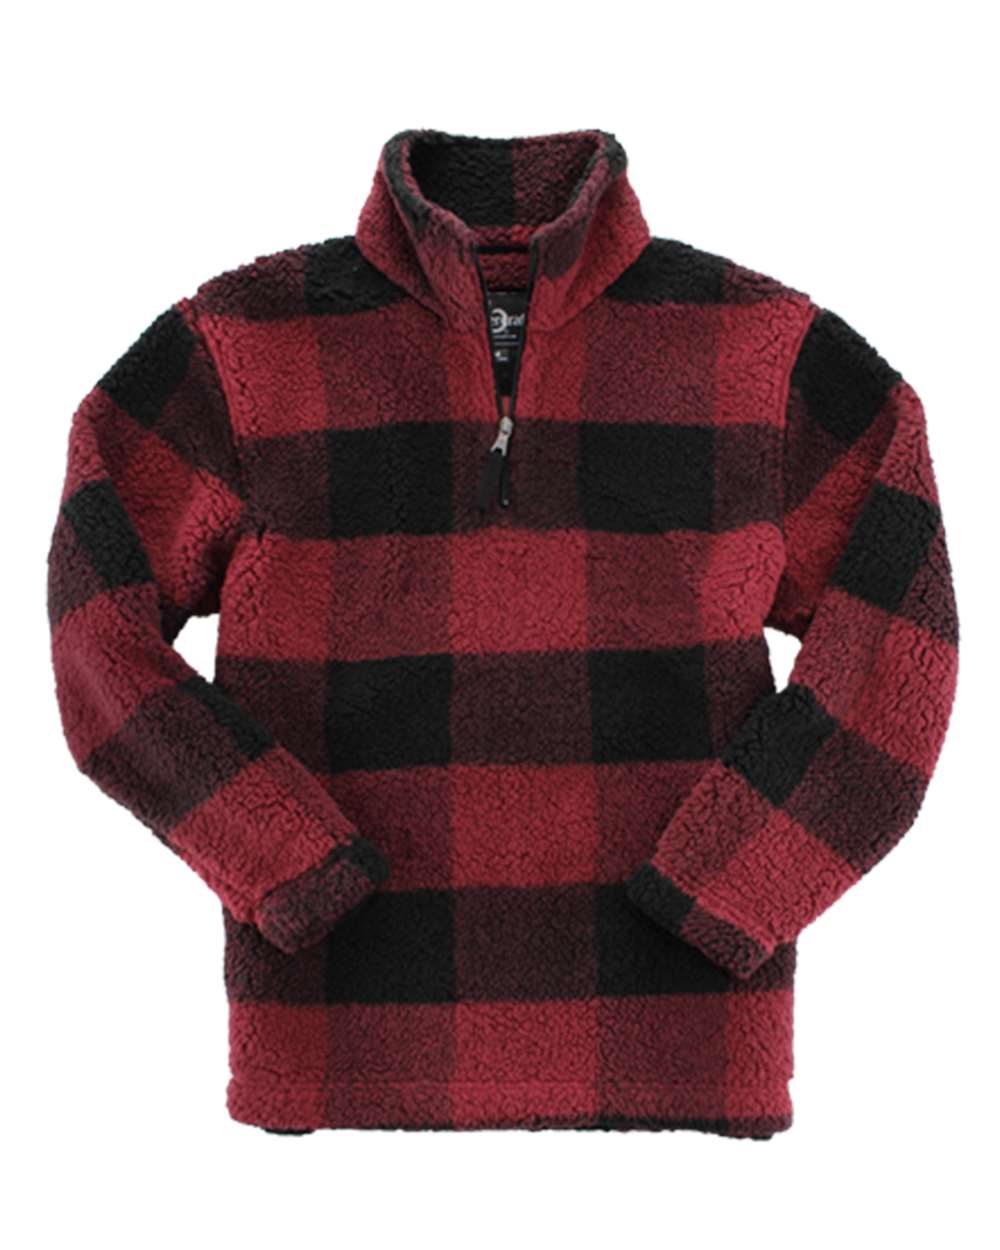 Boxercraft Q10 - Sherpa 1/4 Zip Pullover $26.39 - Sweatshirts